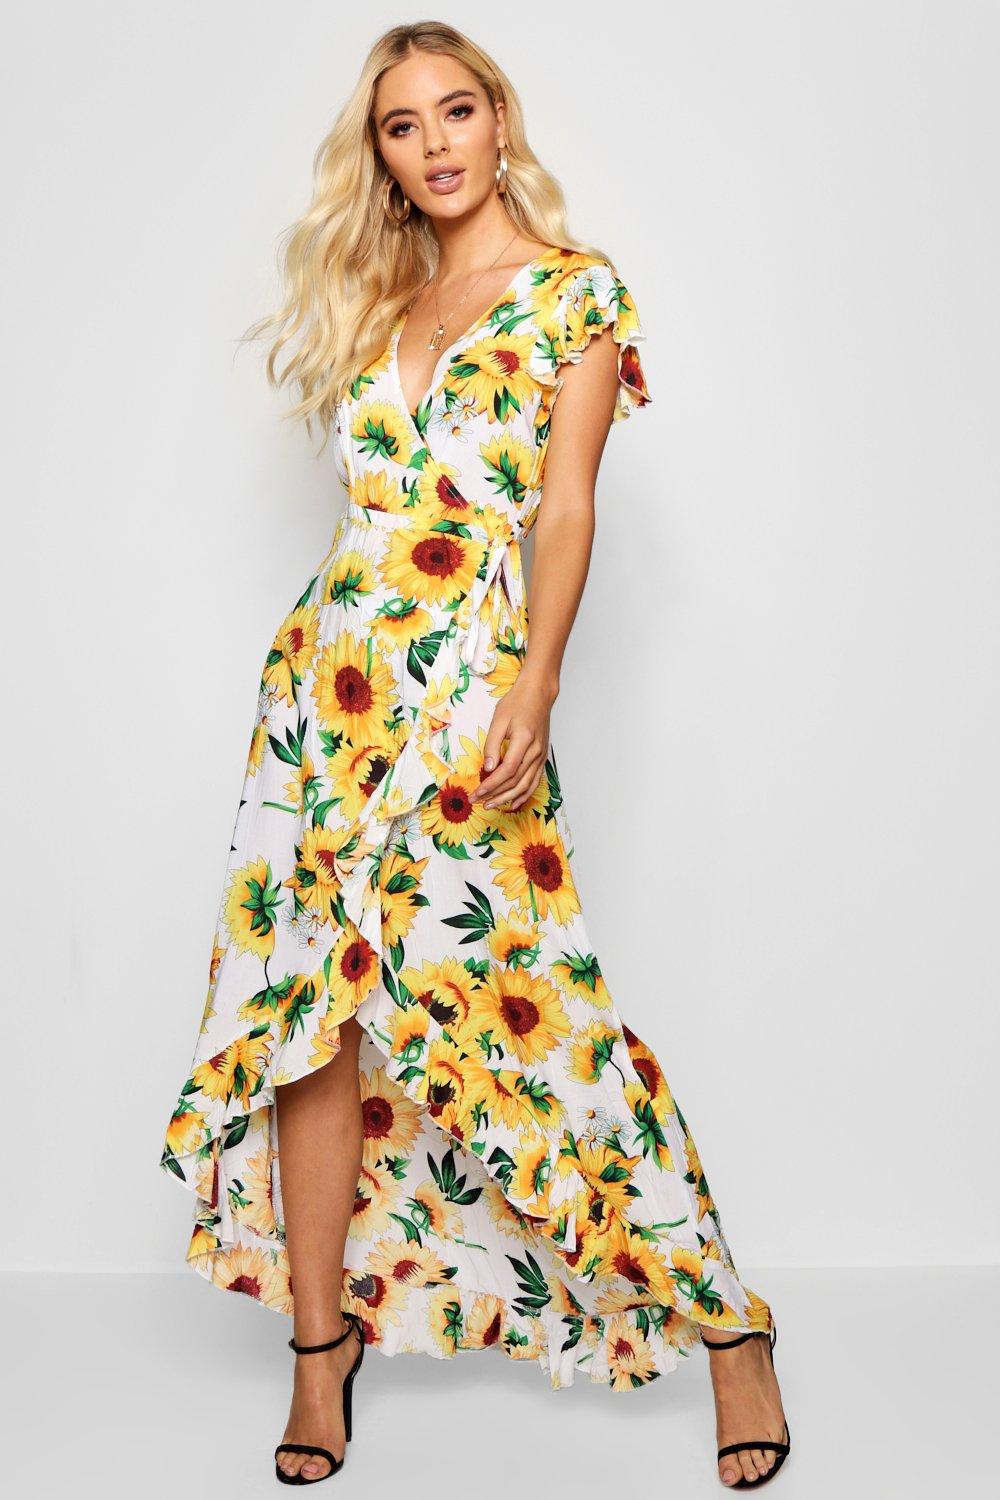 boohoo sunflower dress